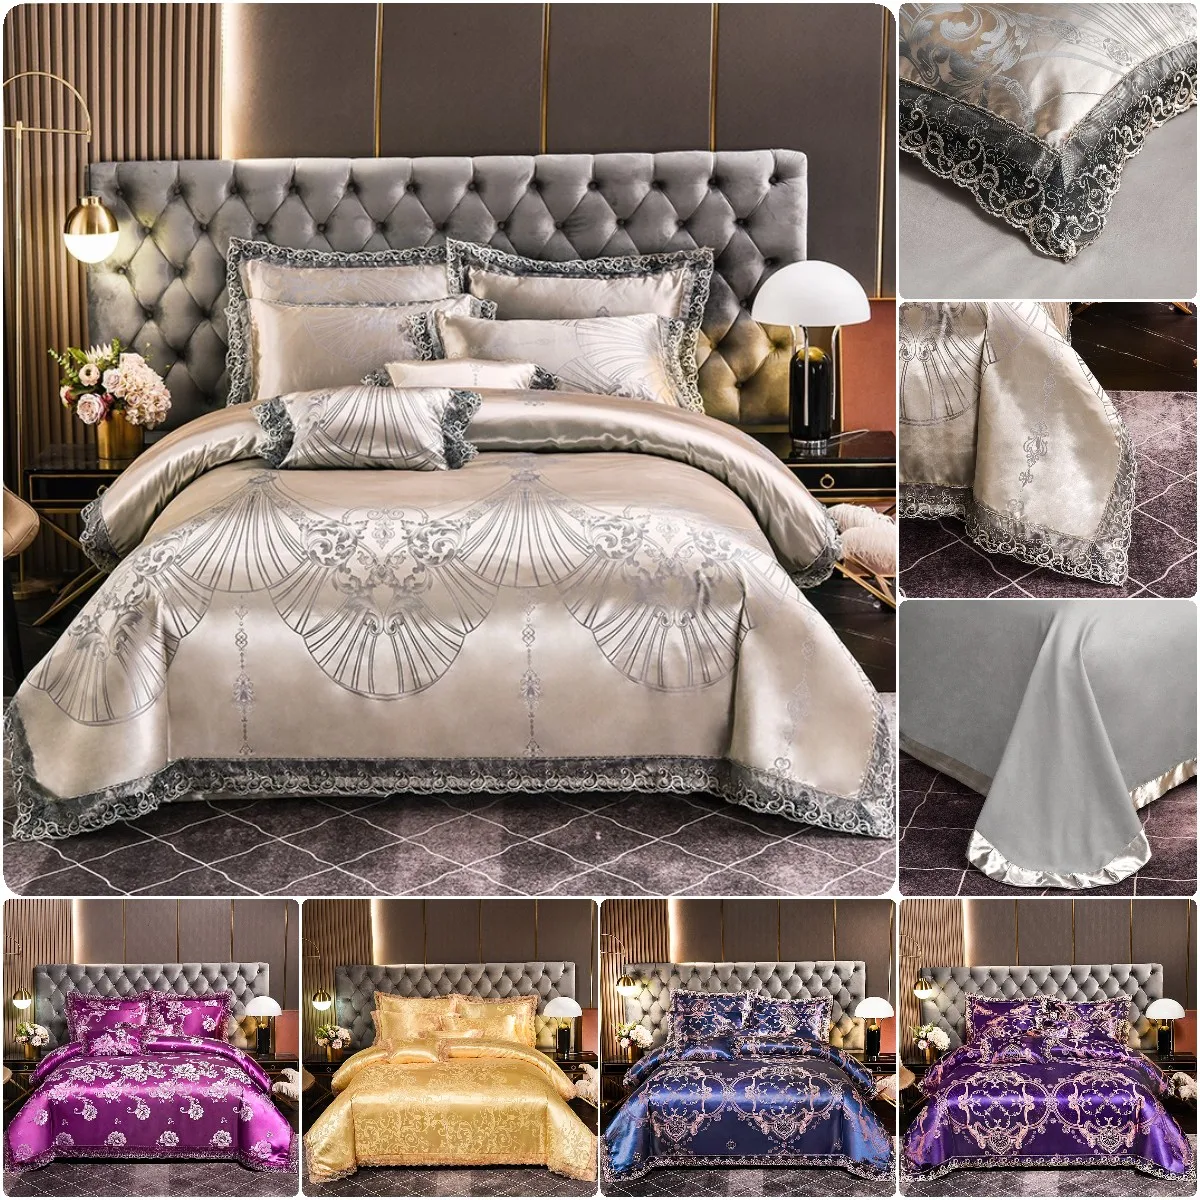 

Morndream Luxury Hometexile Satin Jacquard Bedding Set Lace Duvet Cover Sets +Pillowcase Twin Queen King 2/3/4pcs Quilt Cover